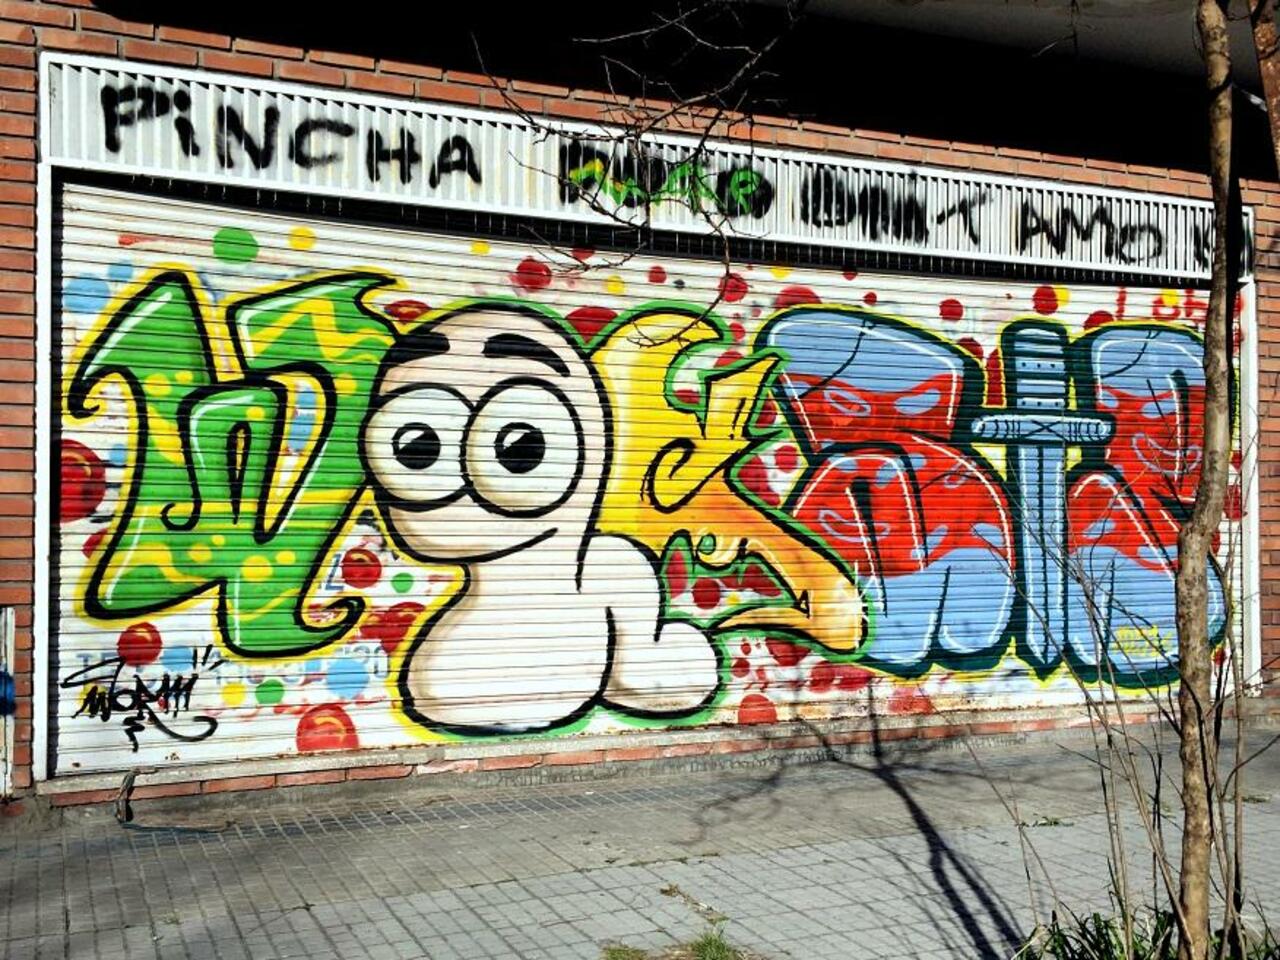 #Graffiti de hoy: << Otro fantasmita feliz >> calle 17, 65y66 #LaPlata #Argentina #StreetArt #UrbanArt #ArteUrbano http://t.co/wJTLDhsaIB